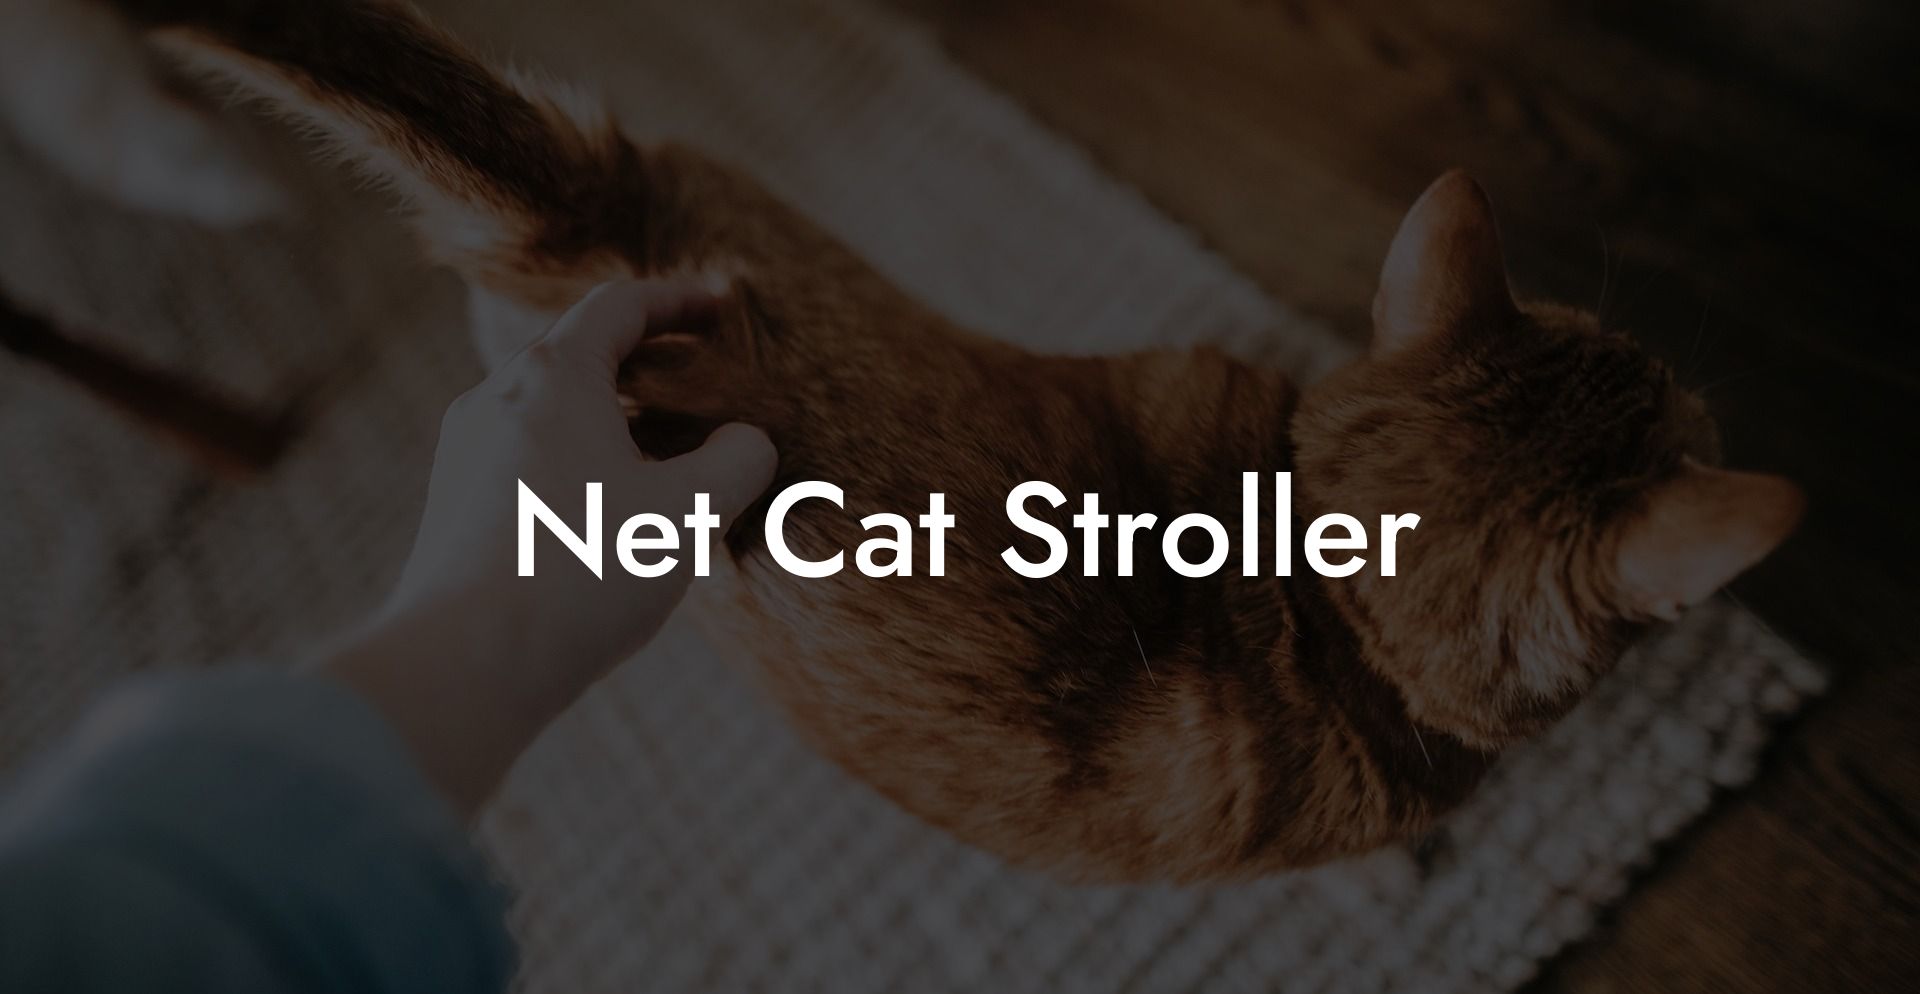 Net Cat Stroller